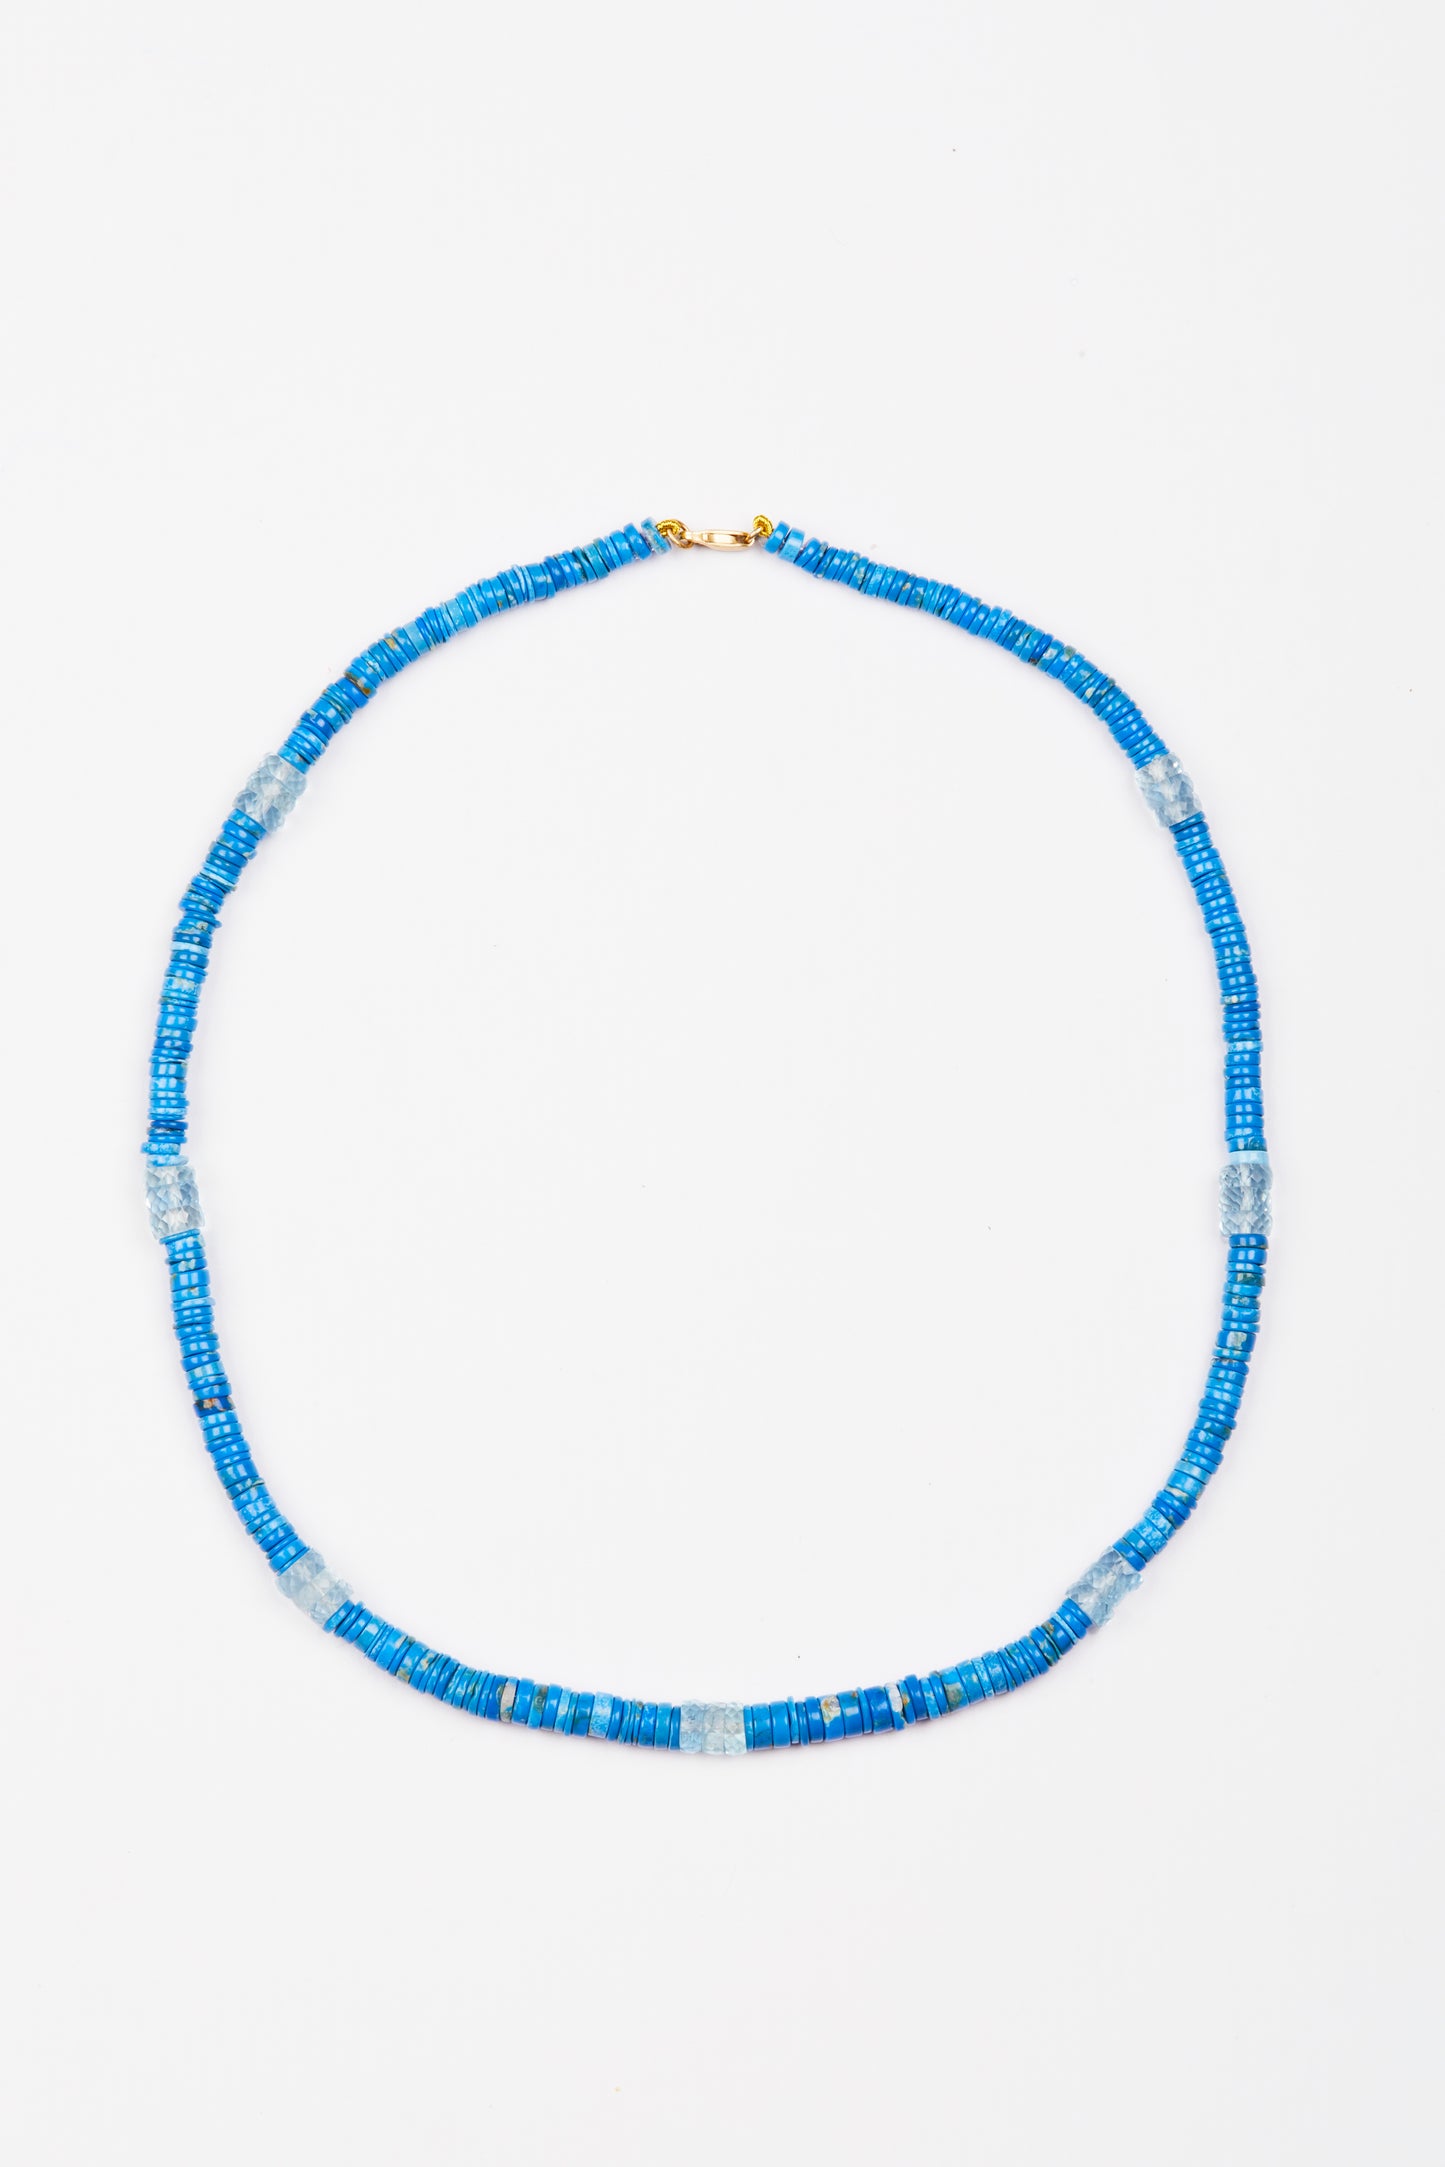 Ceruleite Heishi Beads with Aquamarine